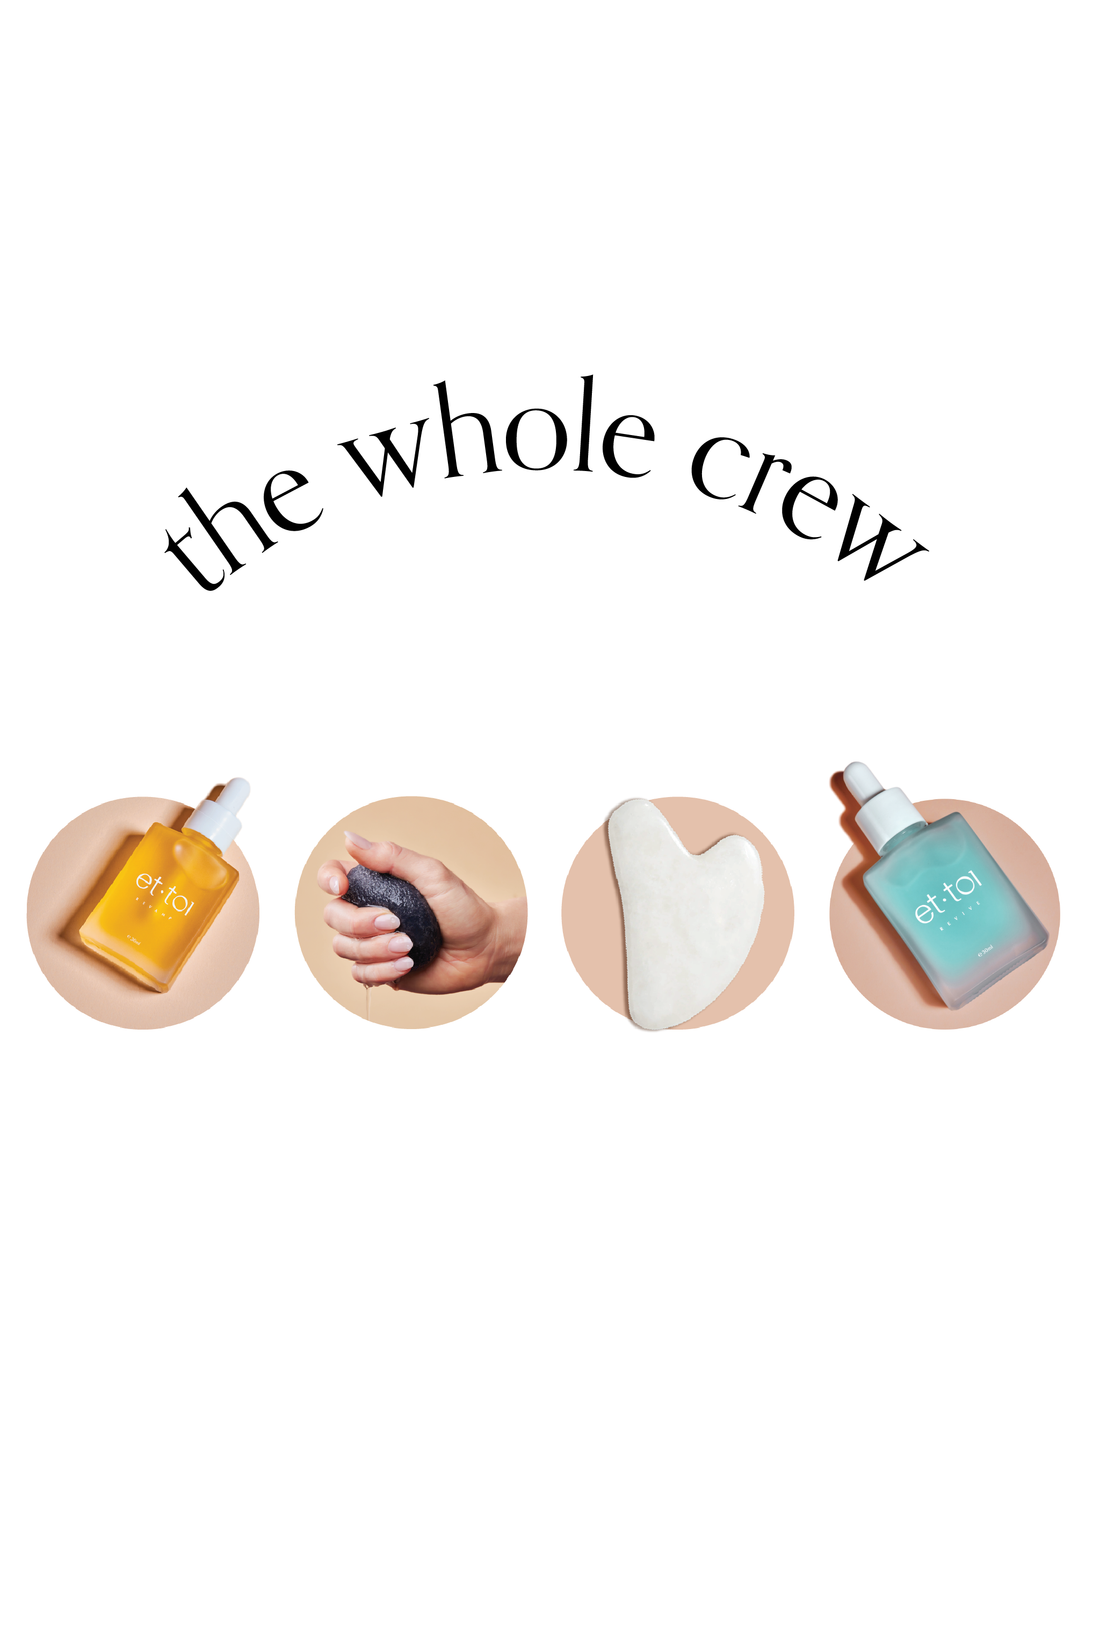 The Whole Crew